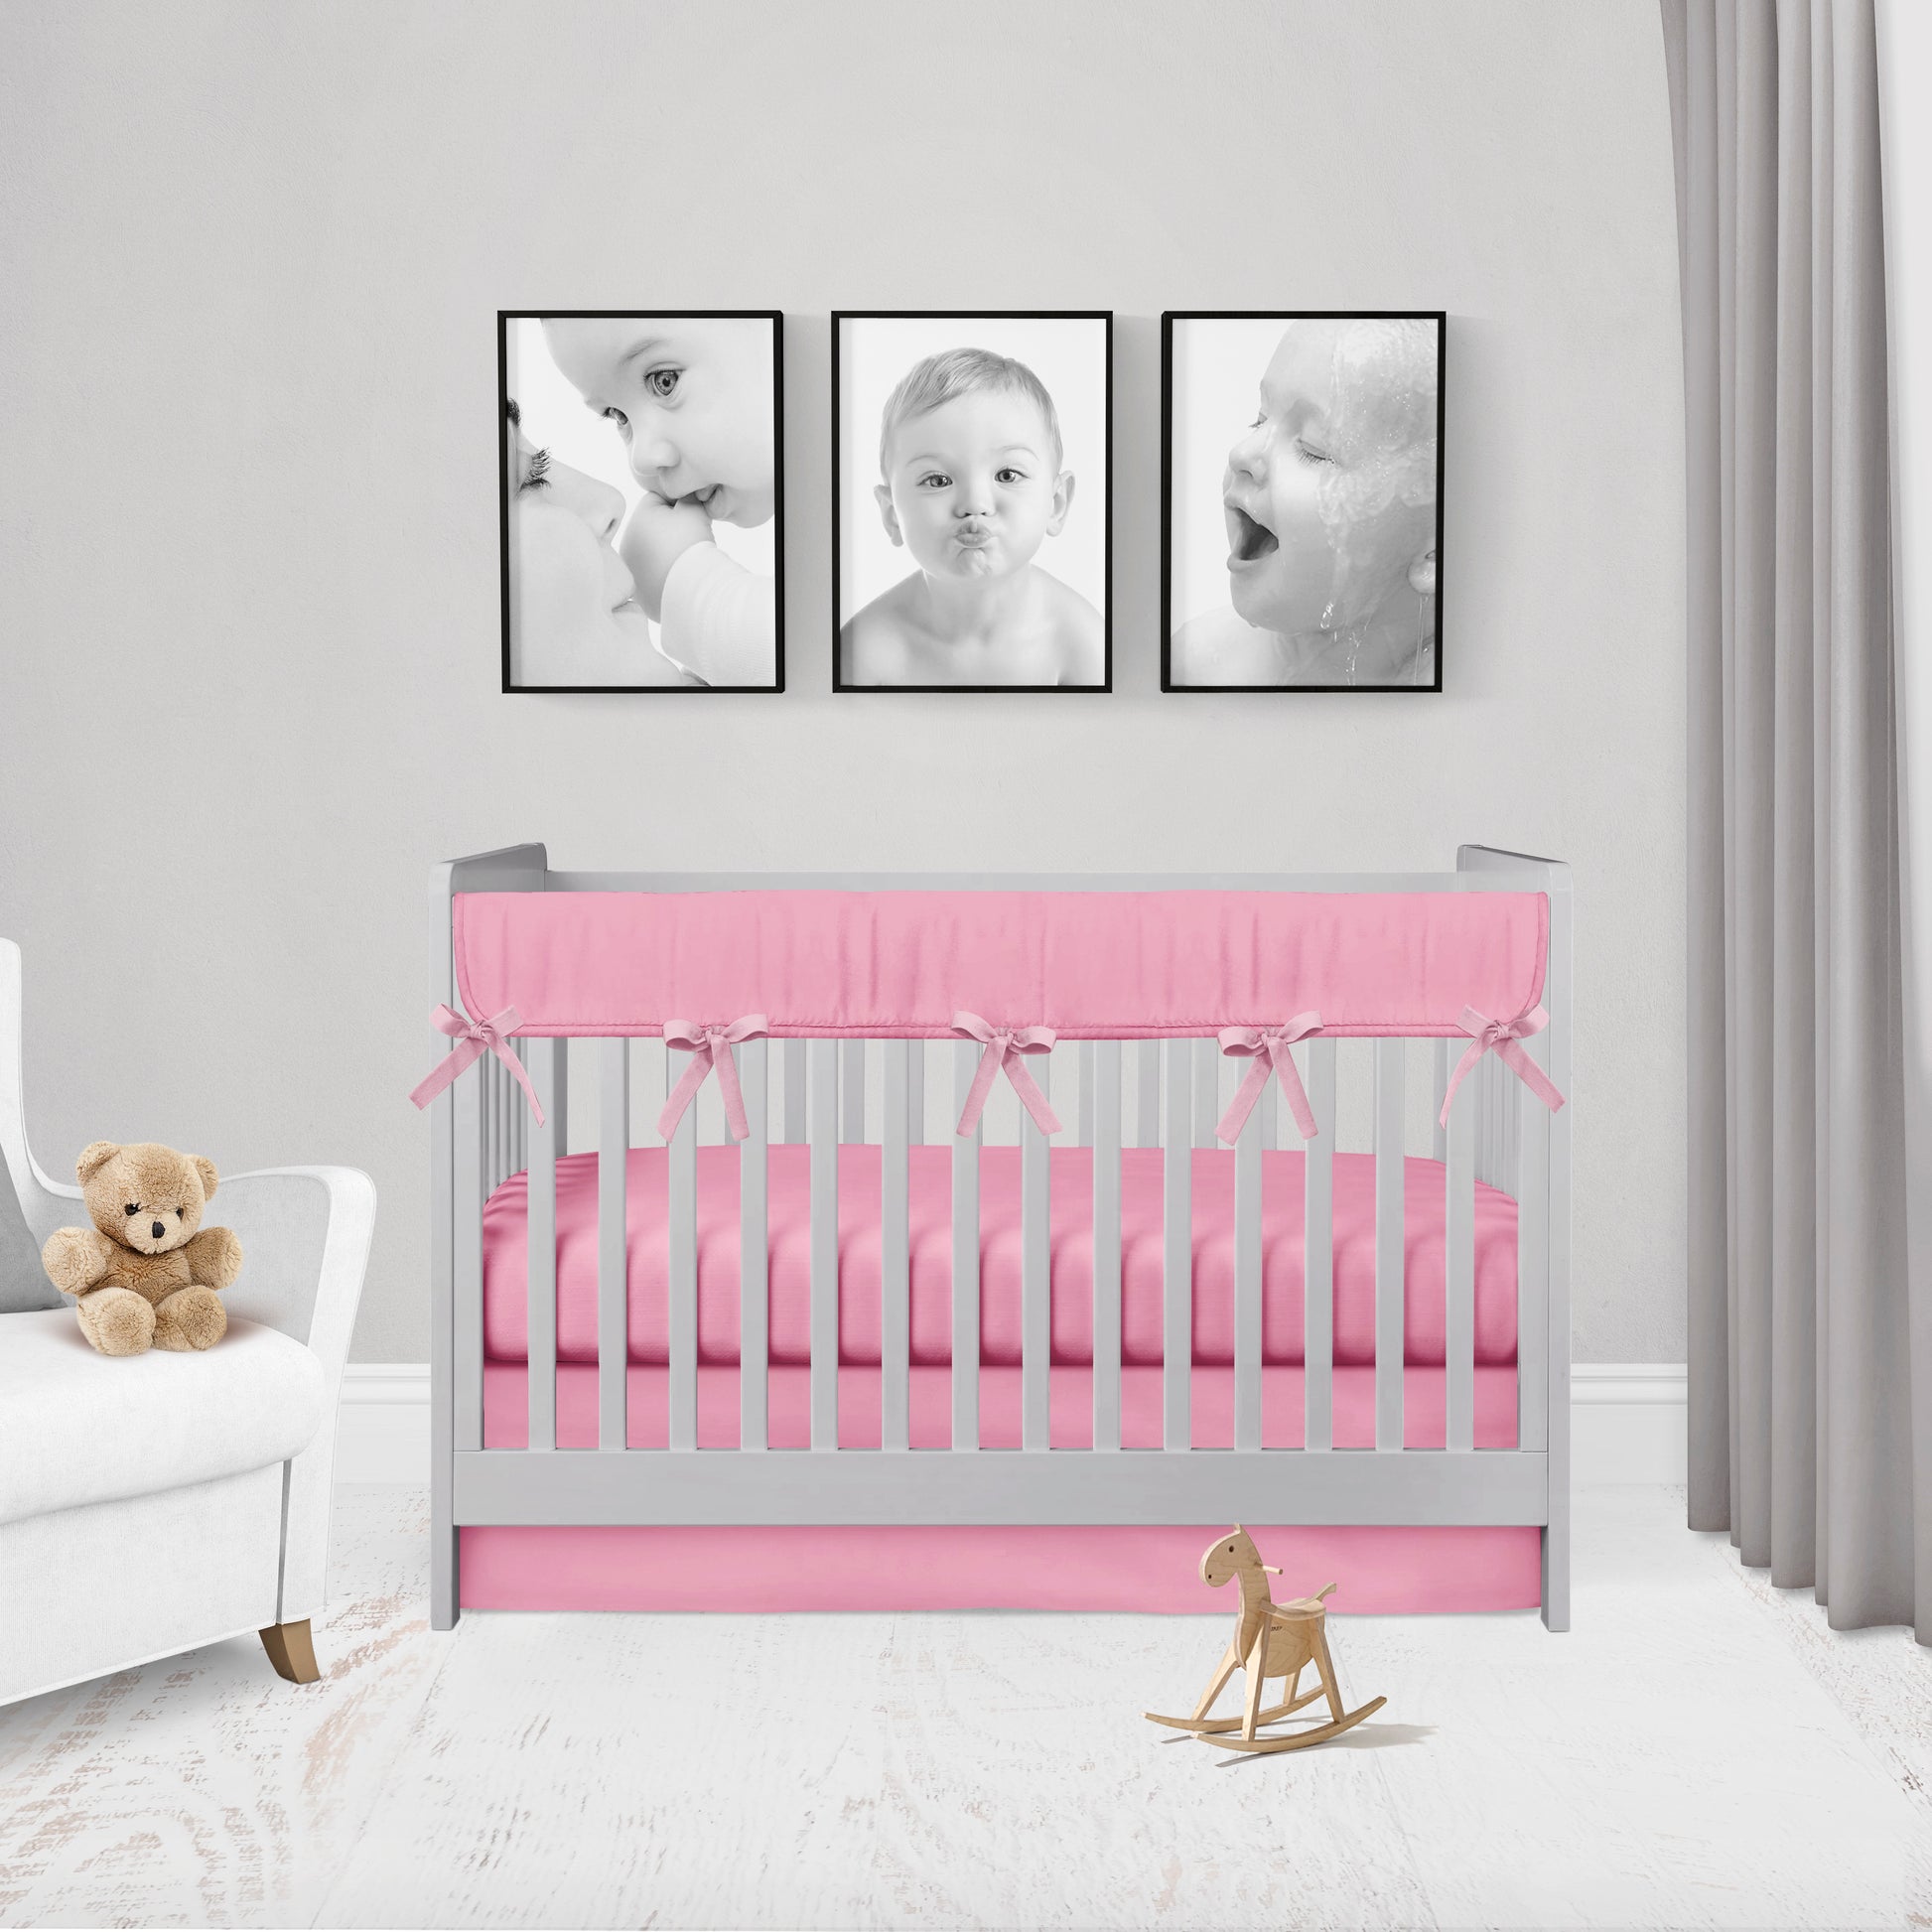 hot pink mini crib set; rail cover, crib sheet & crib skirt in the flat option